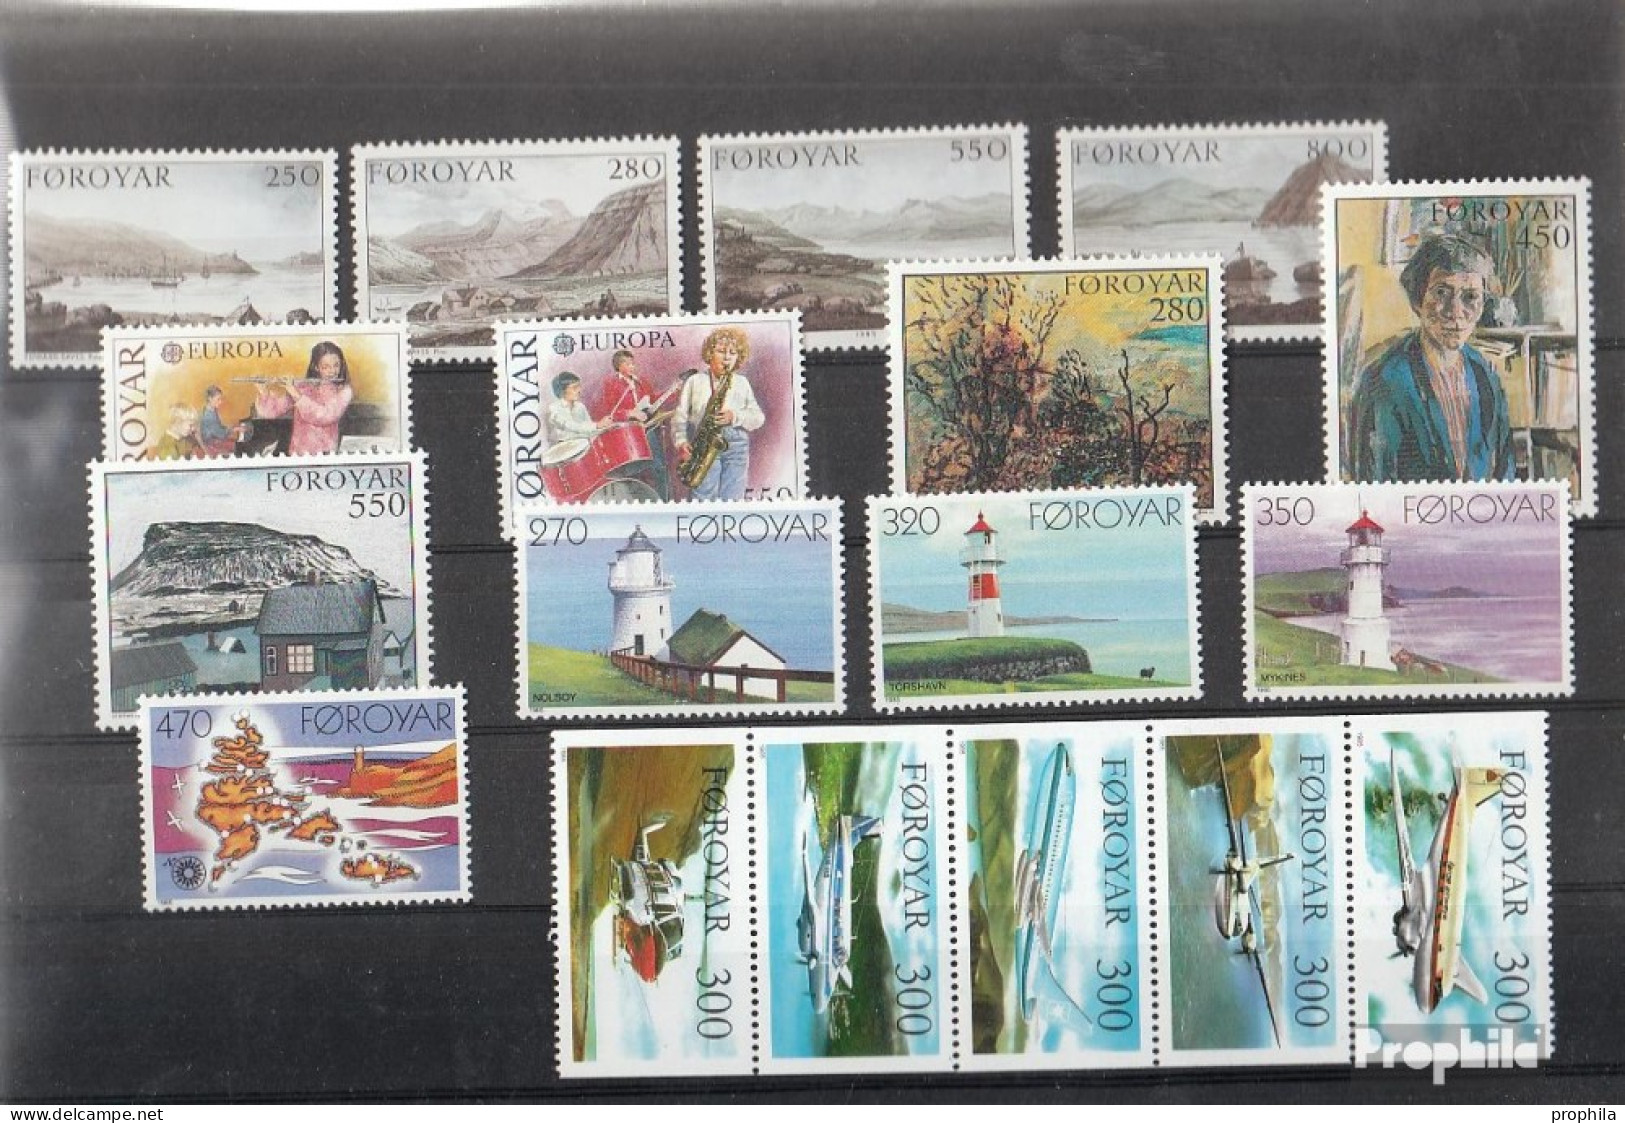 Dänemark - Färöer 1985 Postfrisch Kompletter Jahrgang In Sauberer Erhaltung - Années Complètes